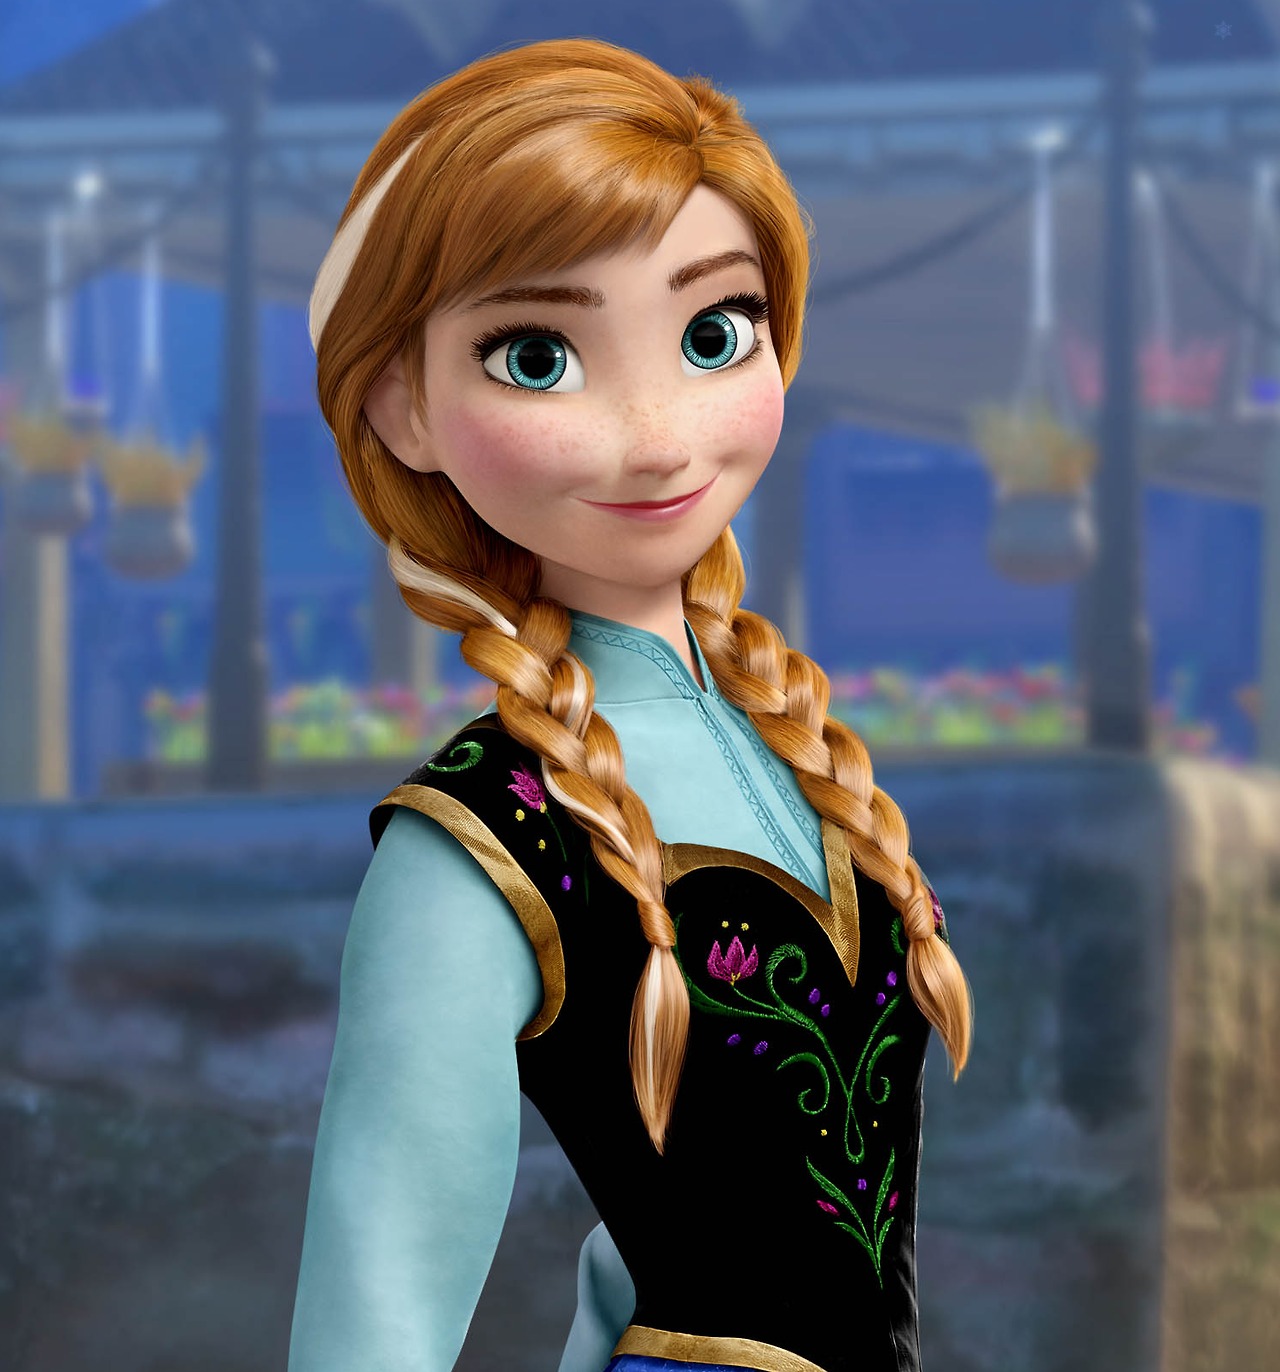 List of Disney Princesses - Disney Princess Wiki